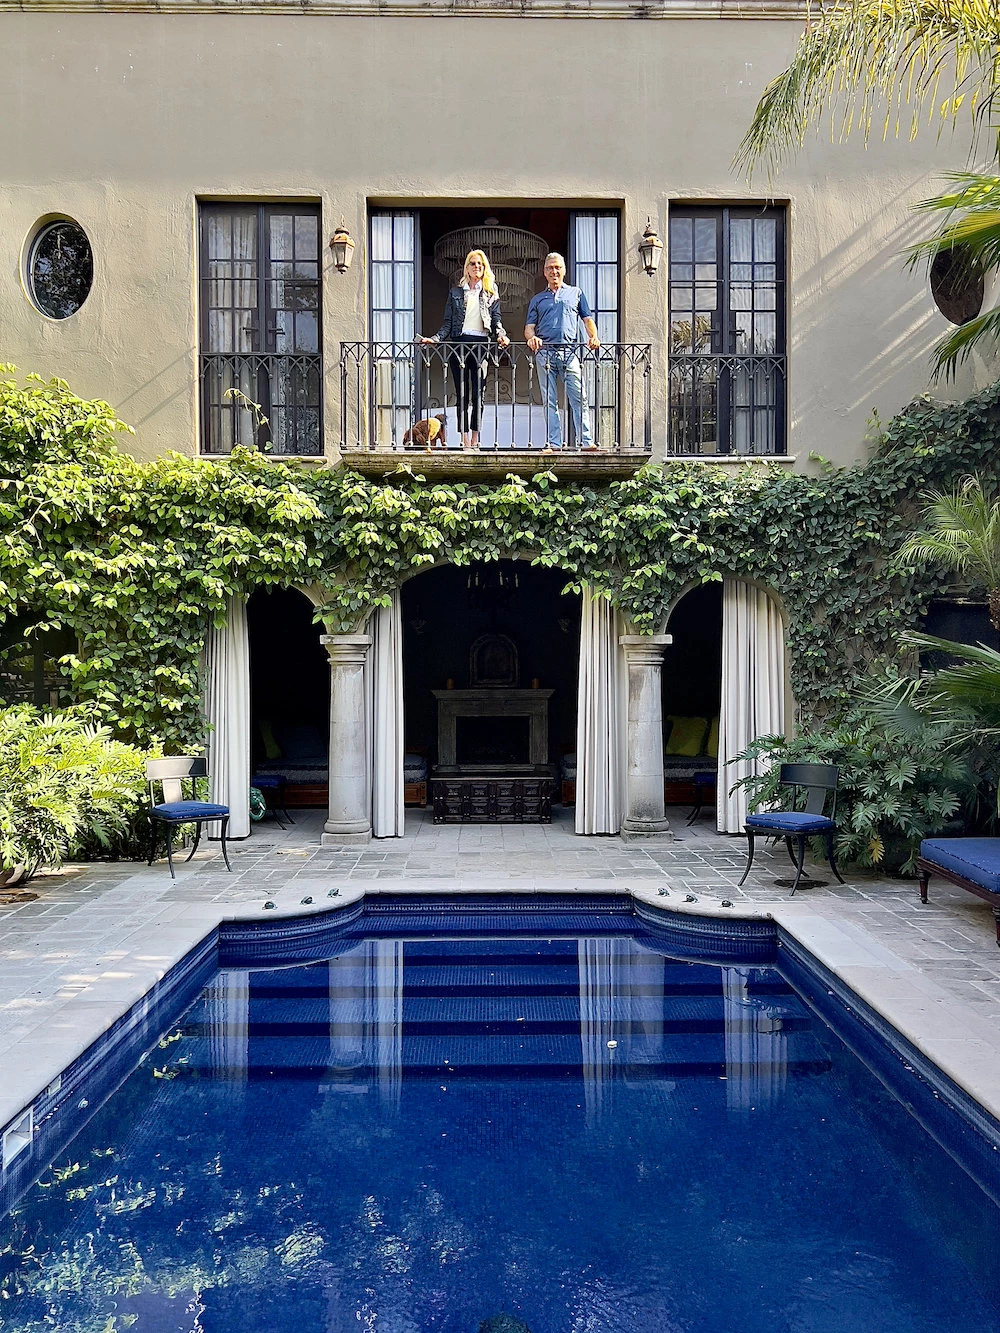 Jeffry Weisman and Susanna Salk in the Casa Acanto pool house